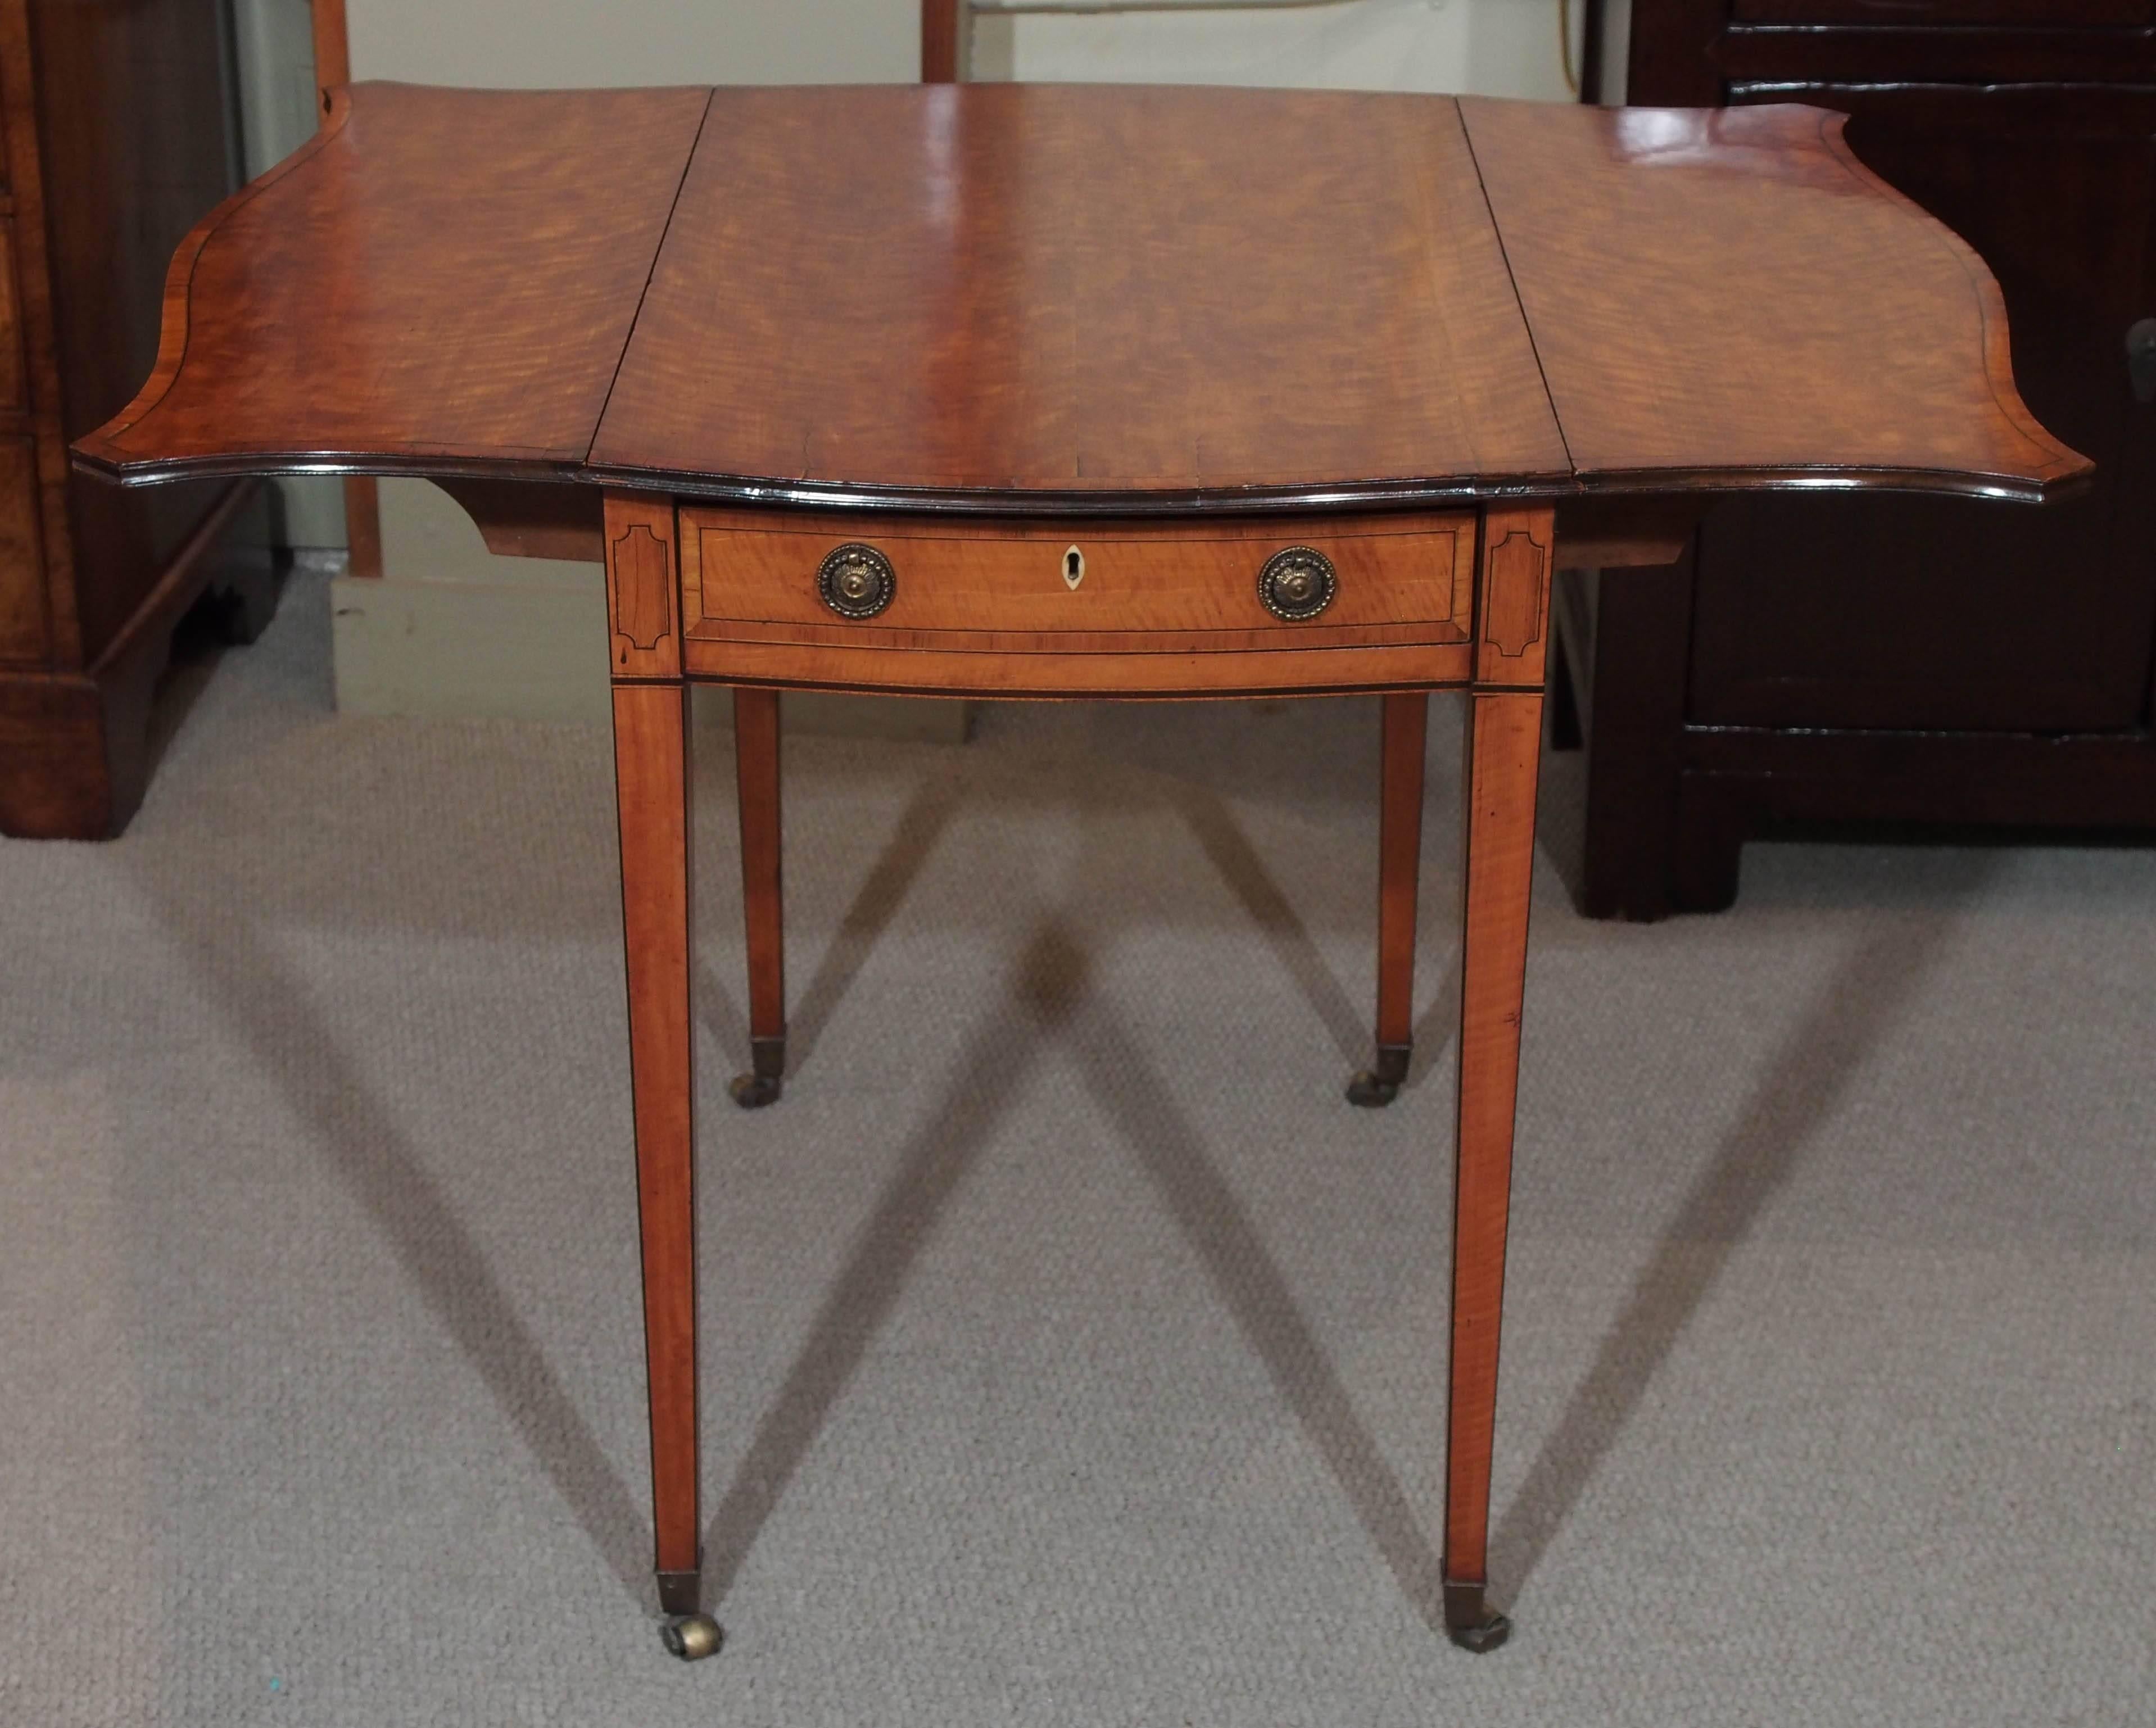 18th century English satinwood pembroke table.
Measures: 19.5